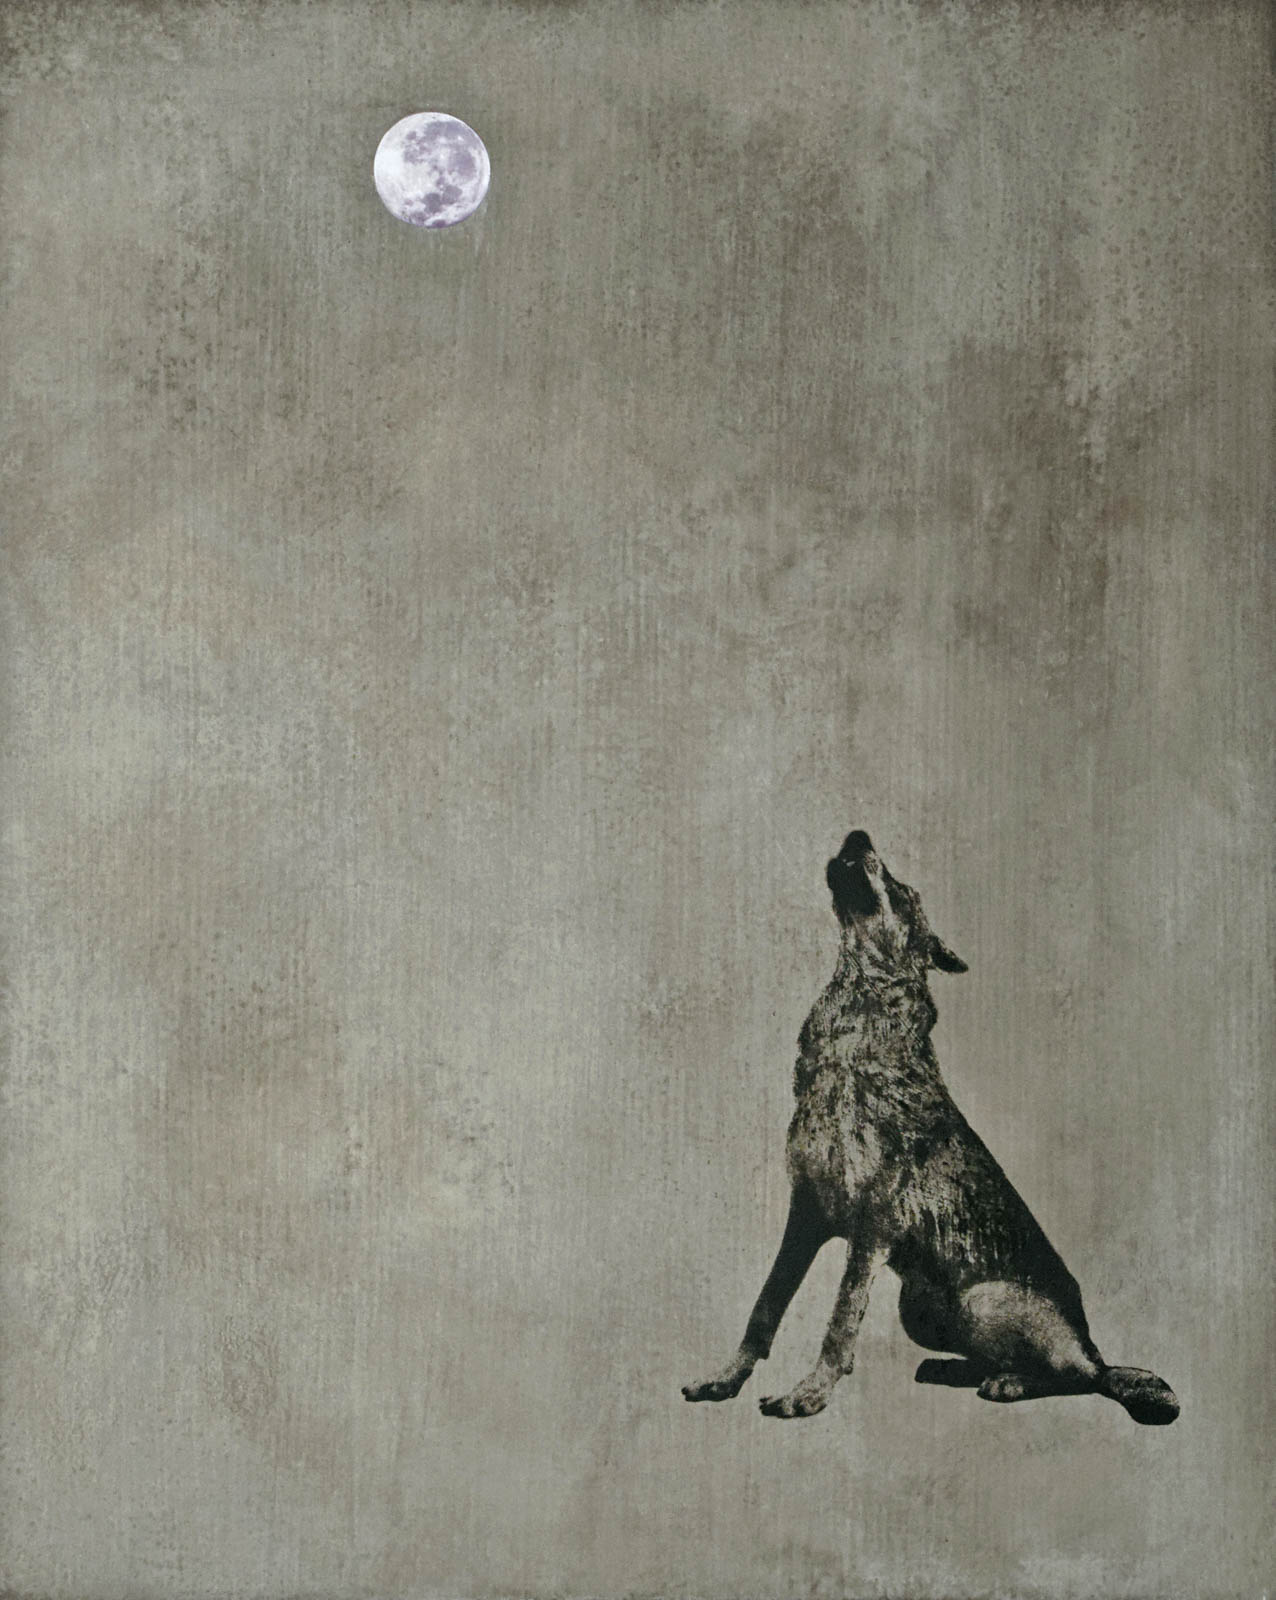 Uwe Hand - Nightmare oder Kojotes Mondaufgang, 2012